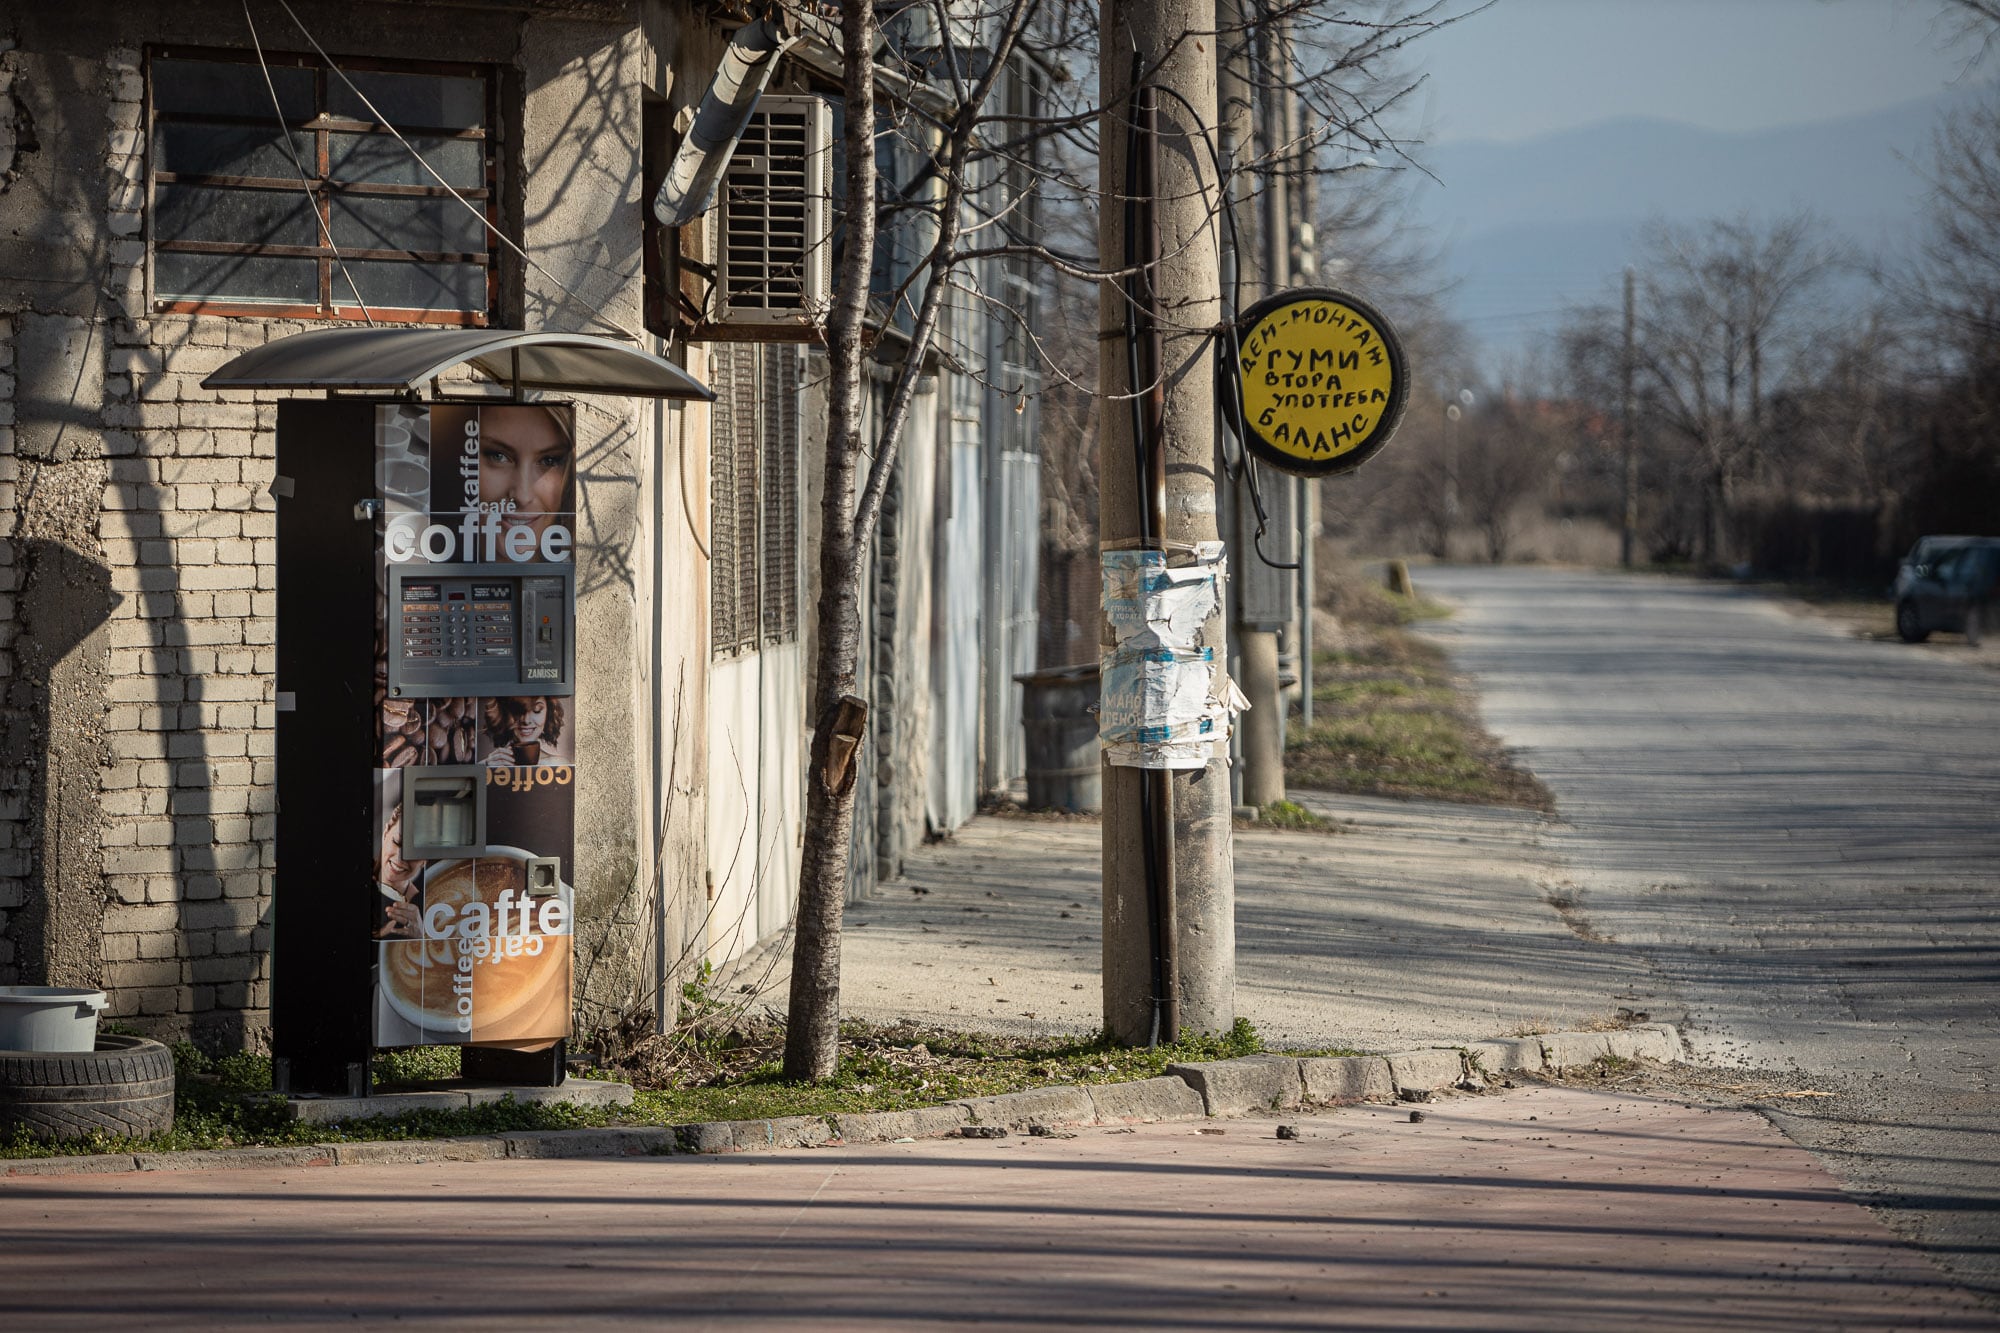 coffee machine on a street corner in Bulgaria